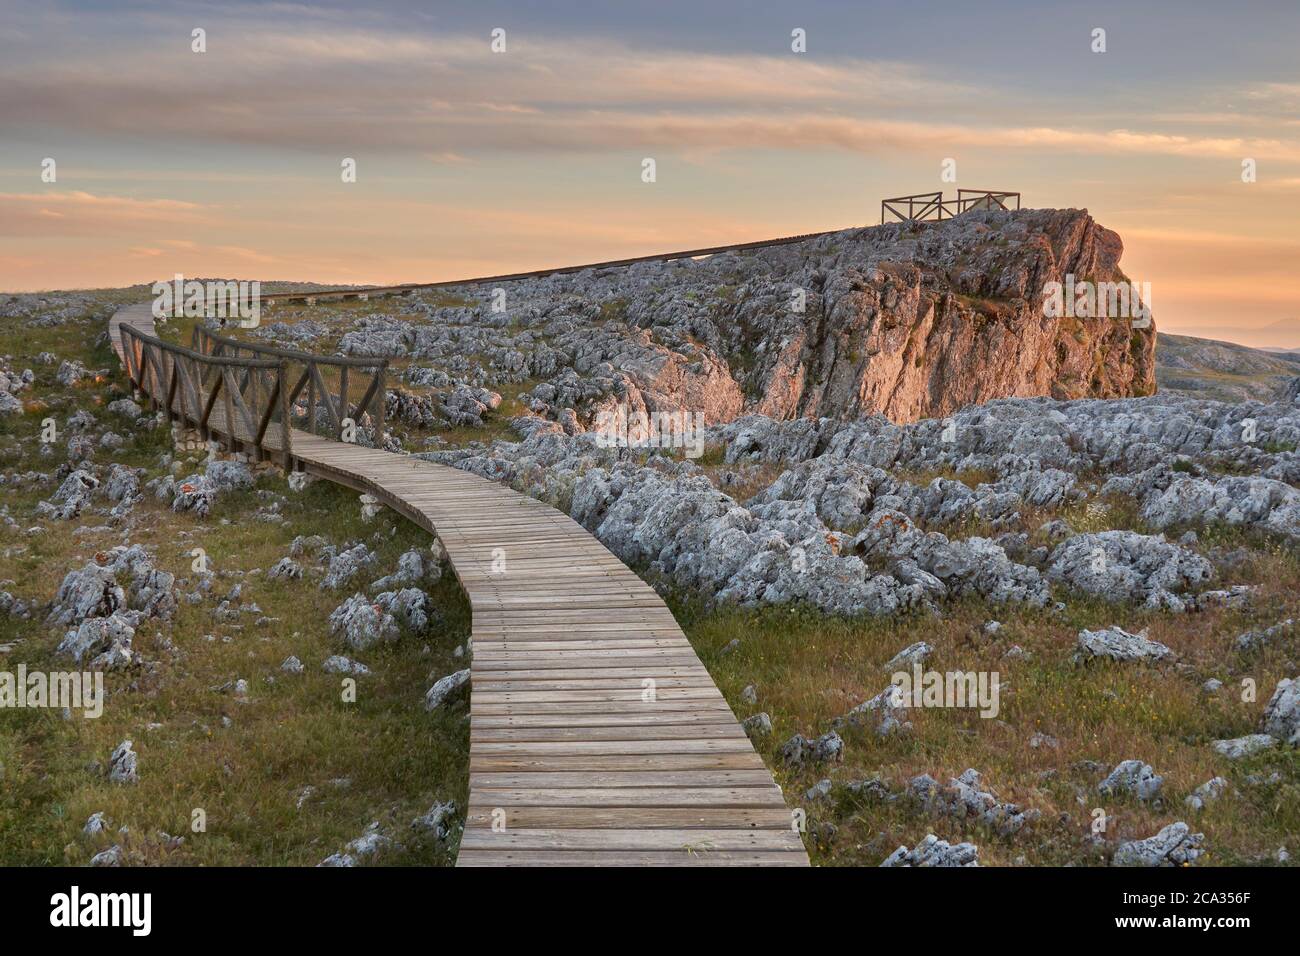 Wooden walkway for public use over the limestone rock landscape in Loja, Granada. Spain. Stock Photo